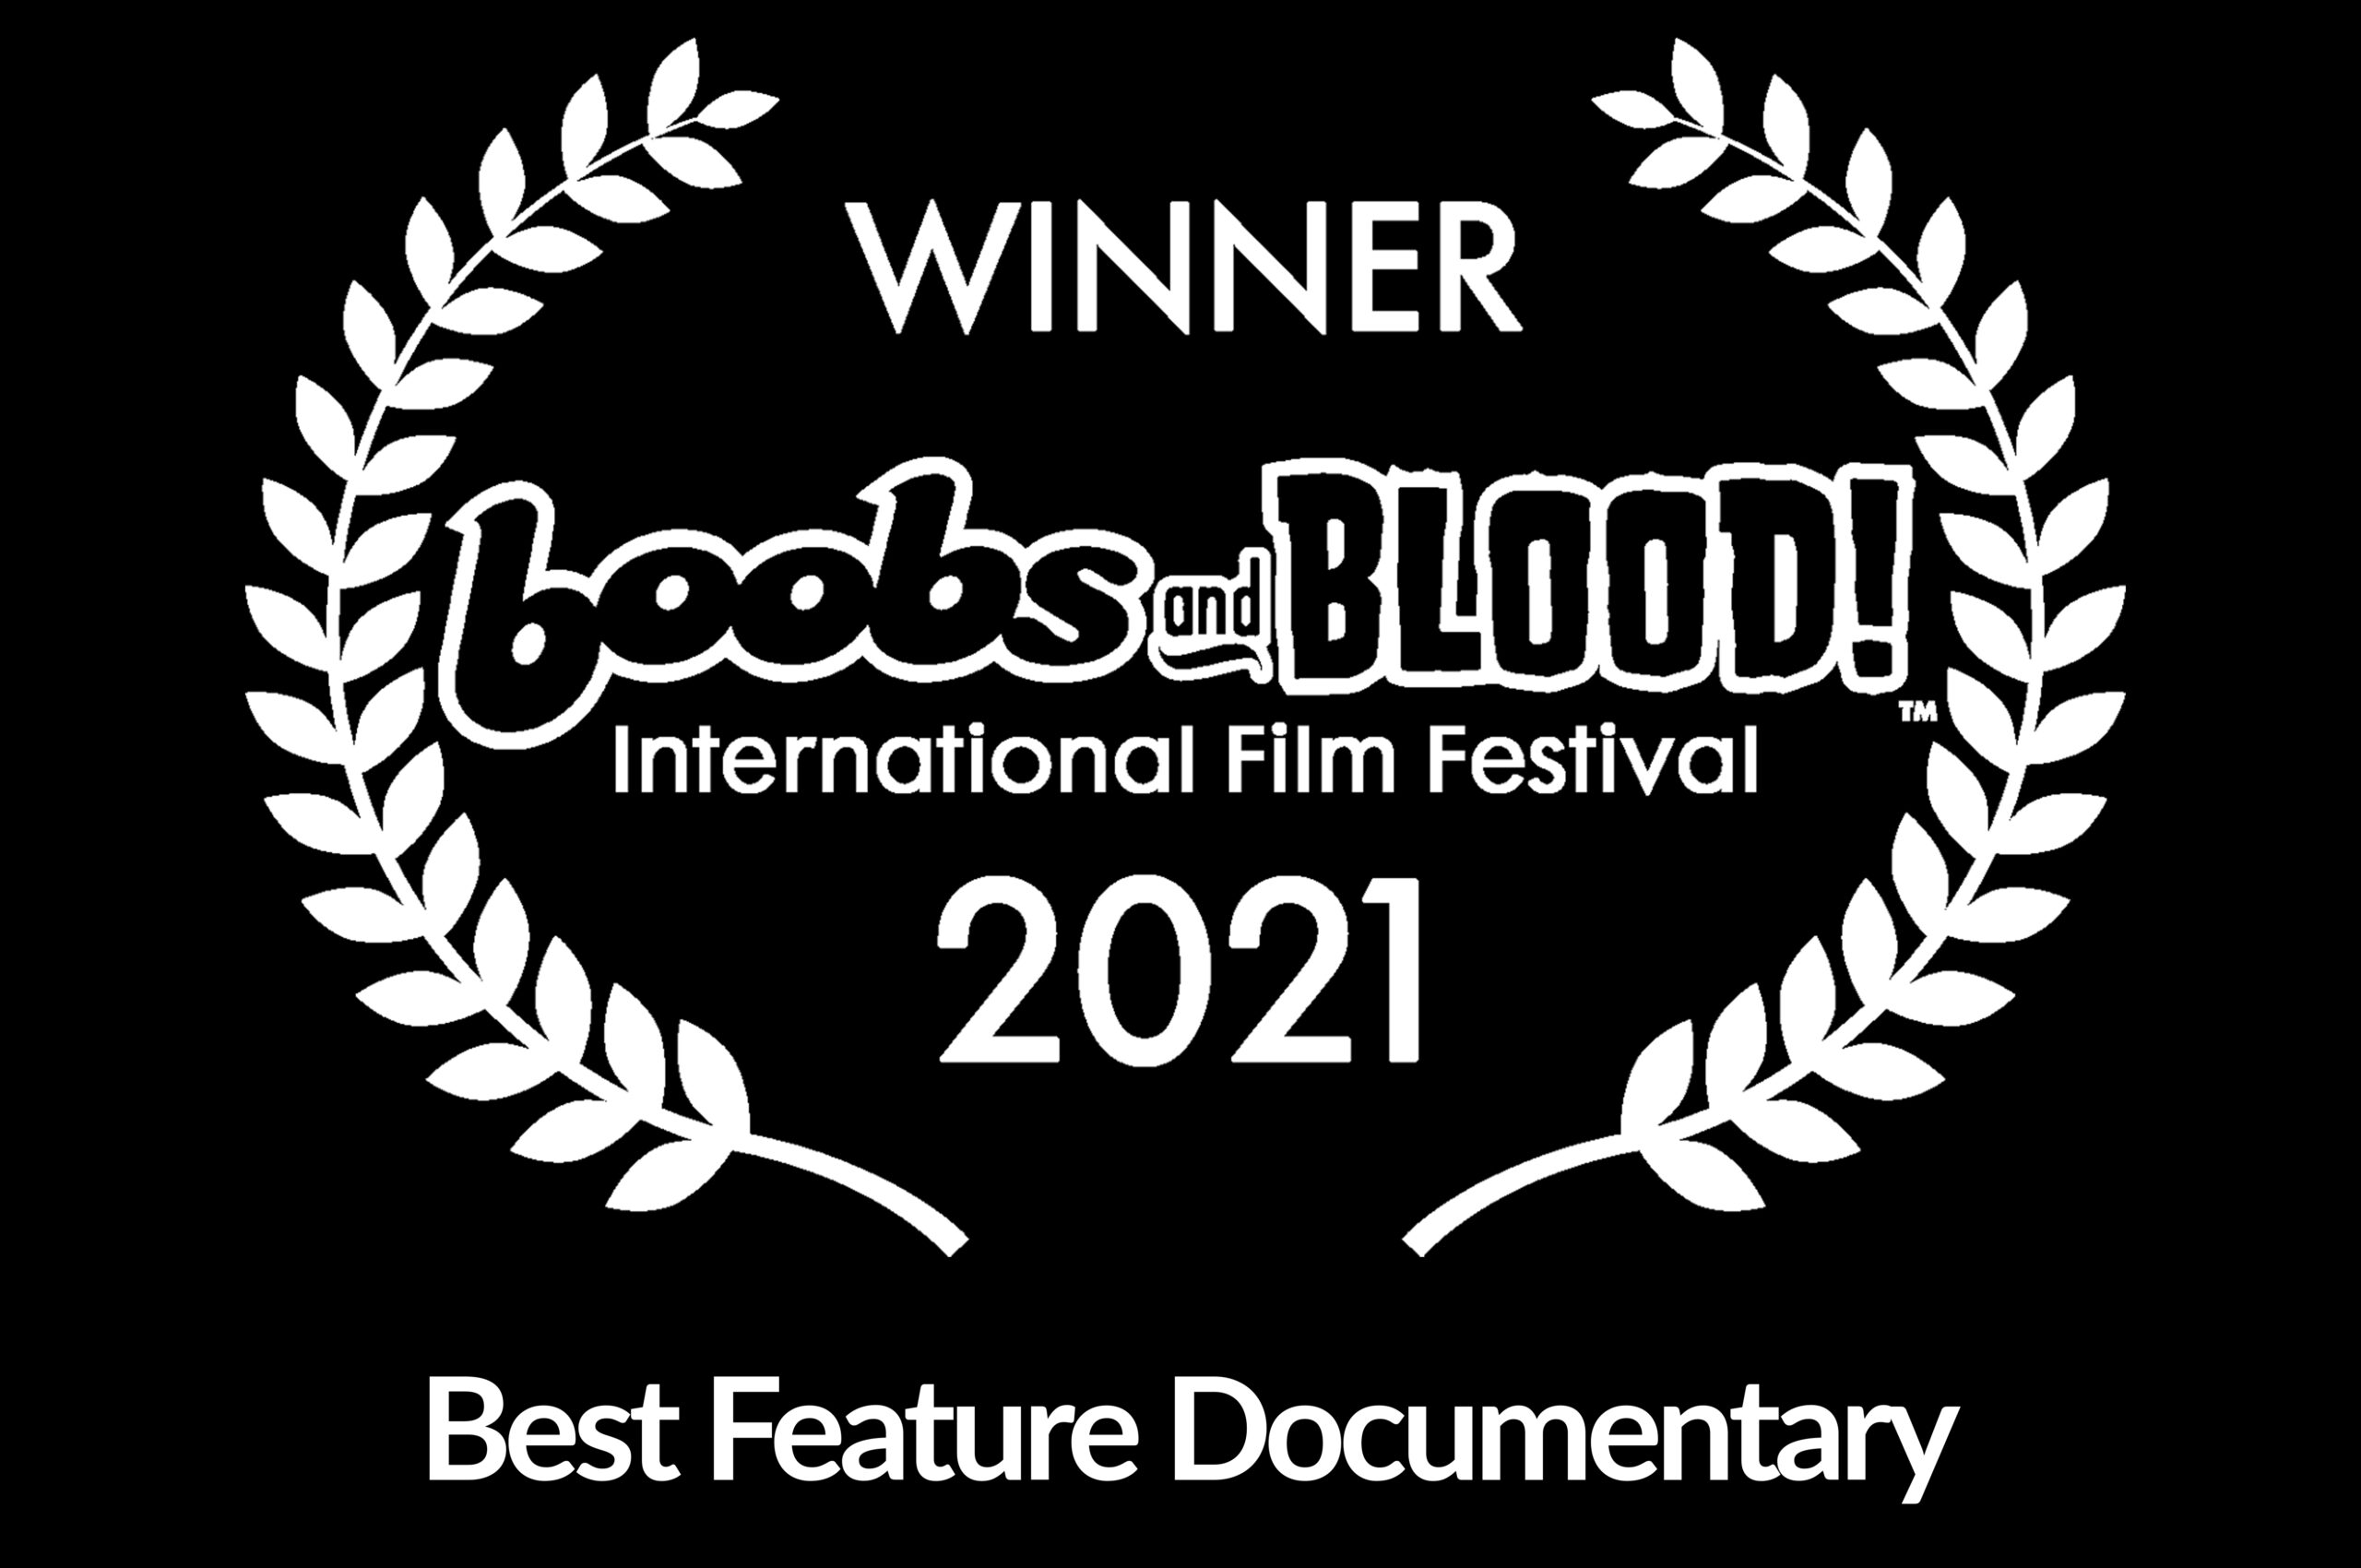 Boobs & Blood Best Feature Documentary 2021 Award